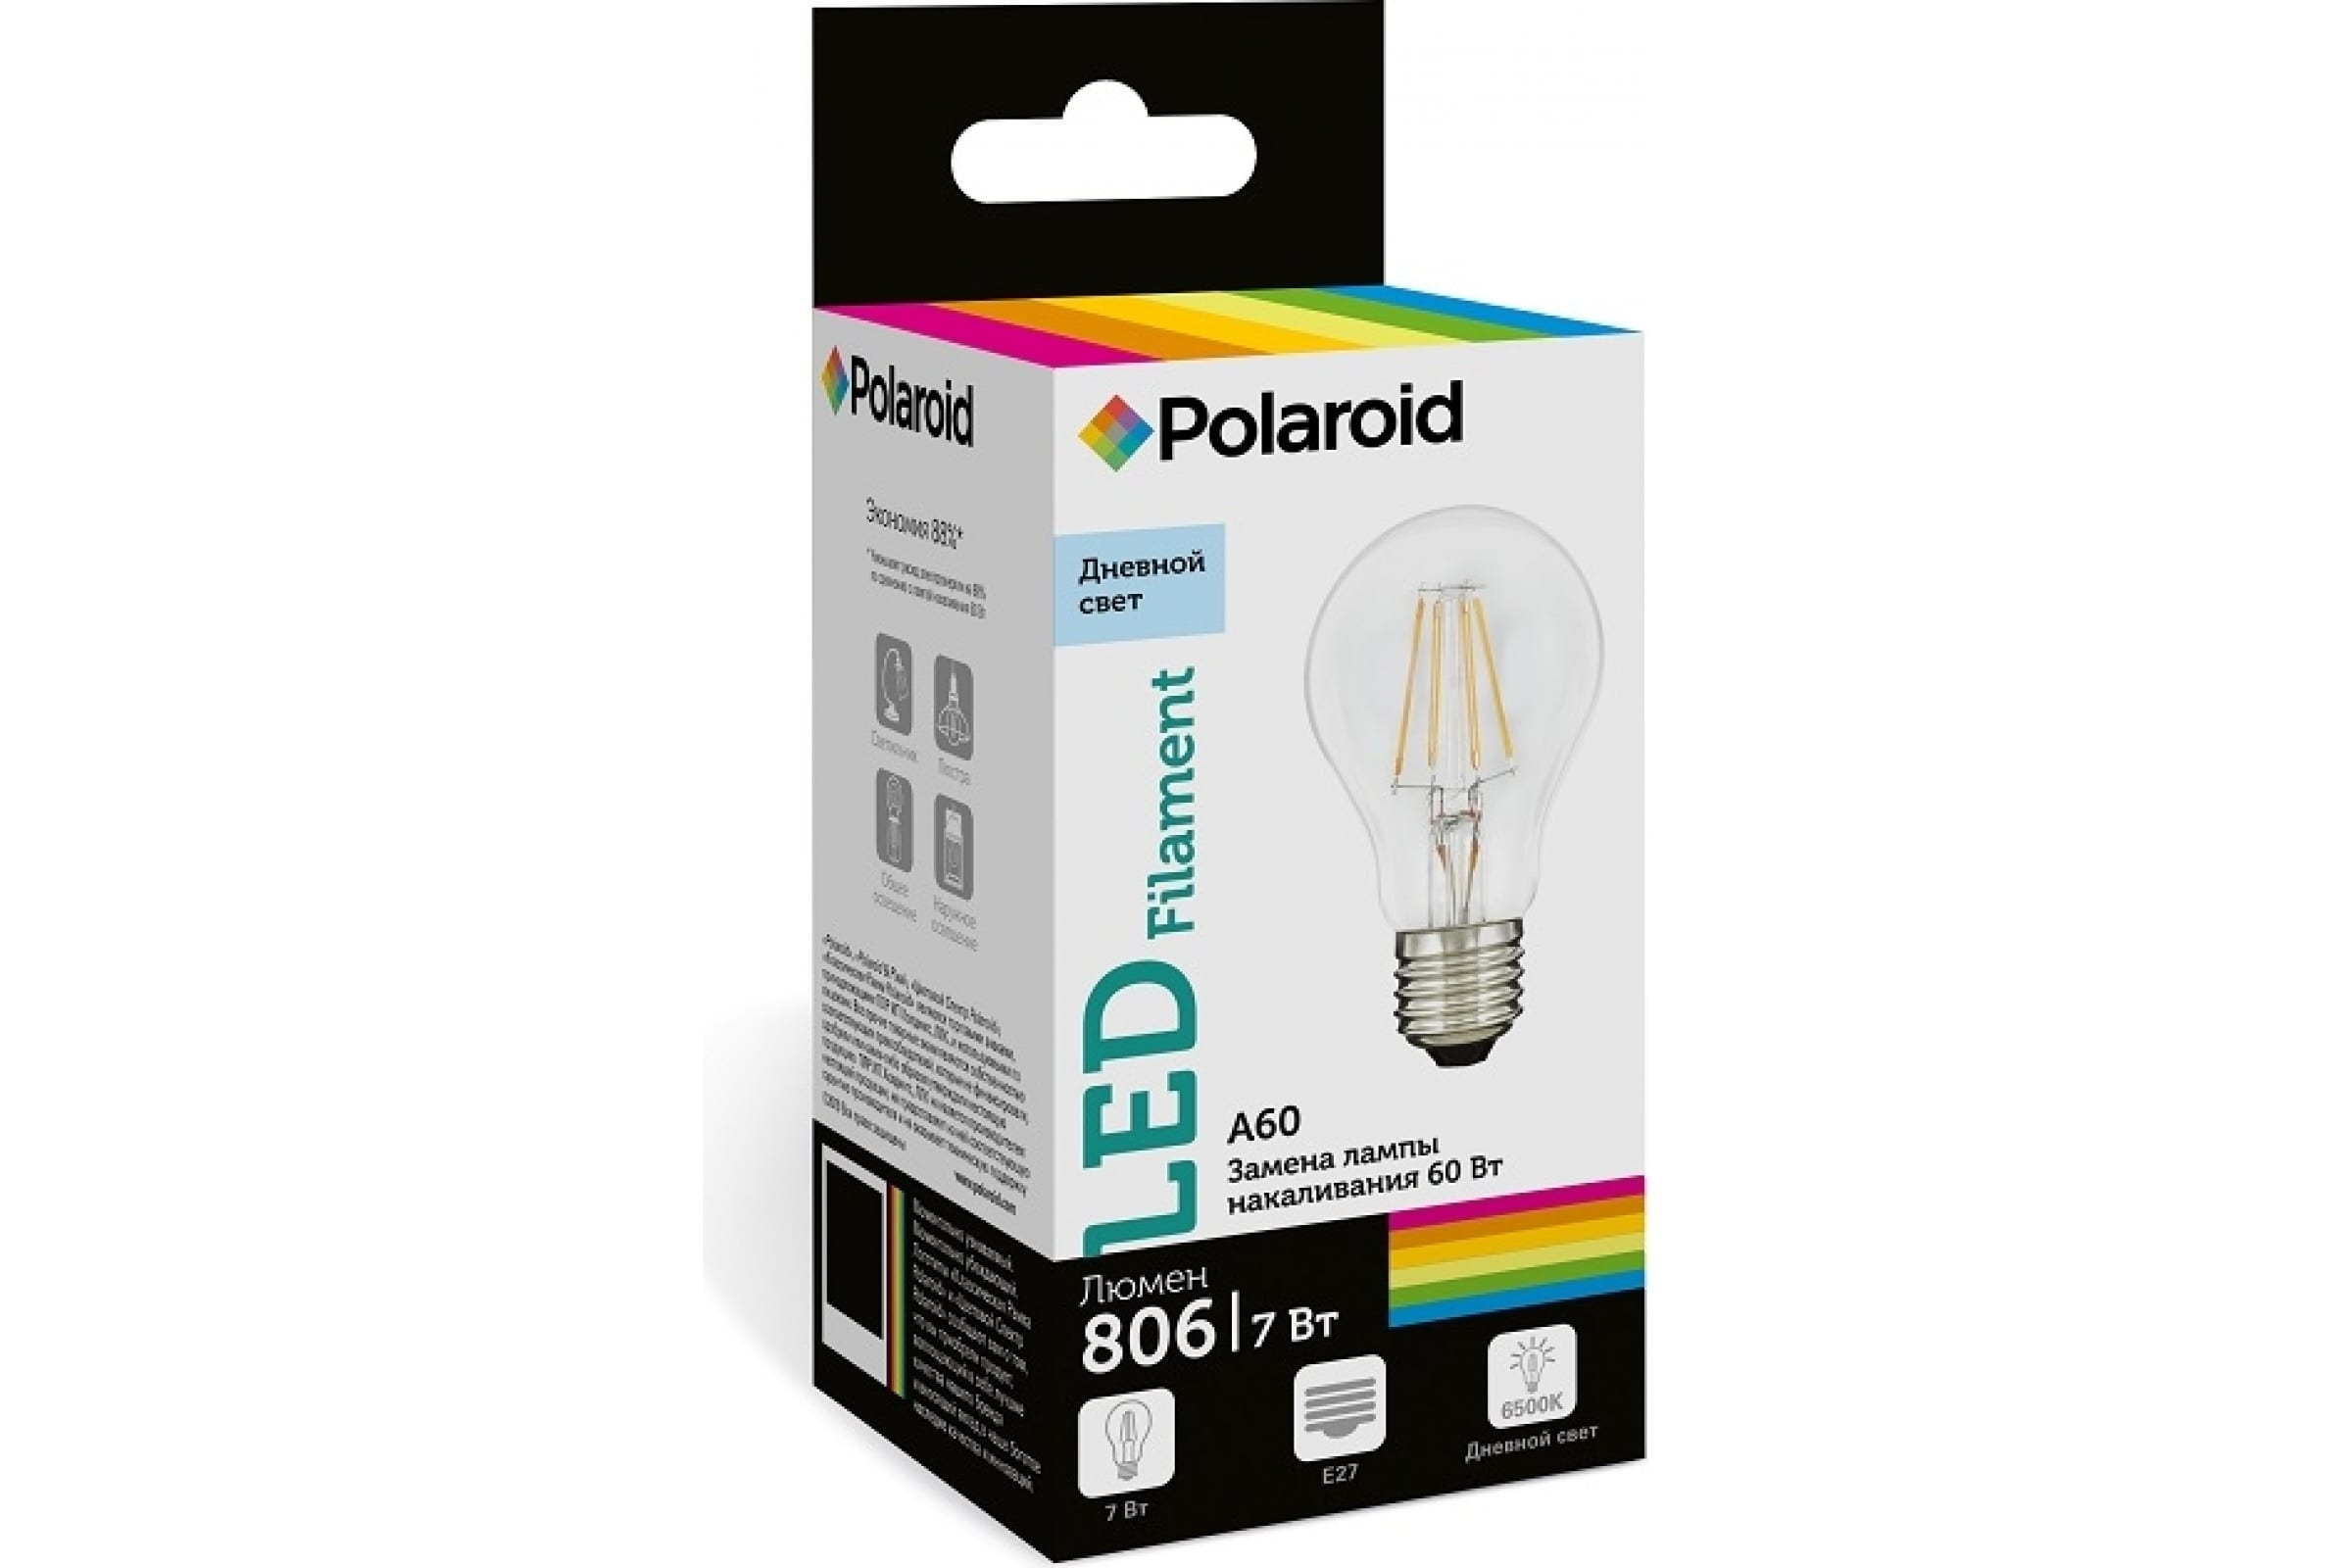 Polaroid Светодиодная лампа 220V FIL A60 7W 6500K E27 806lm PL-A60F7276